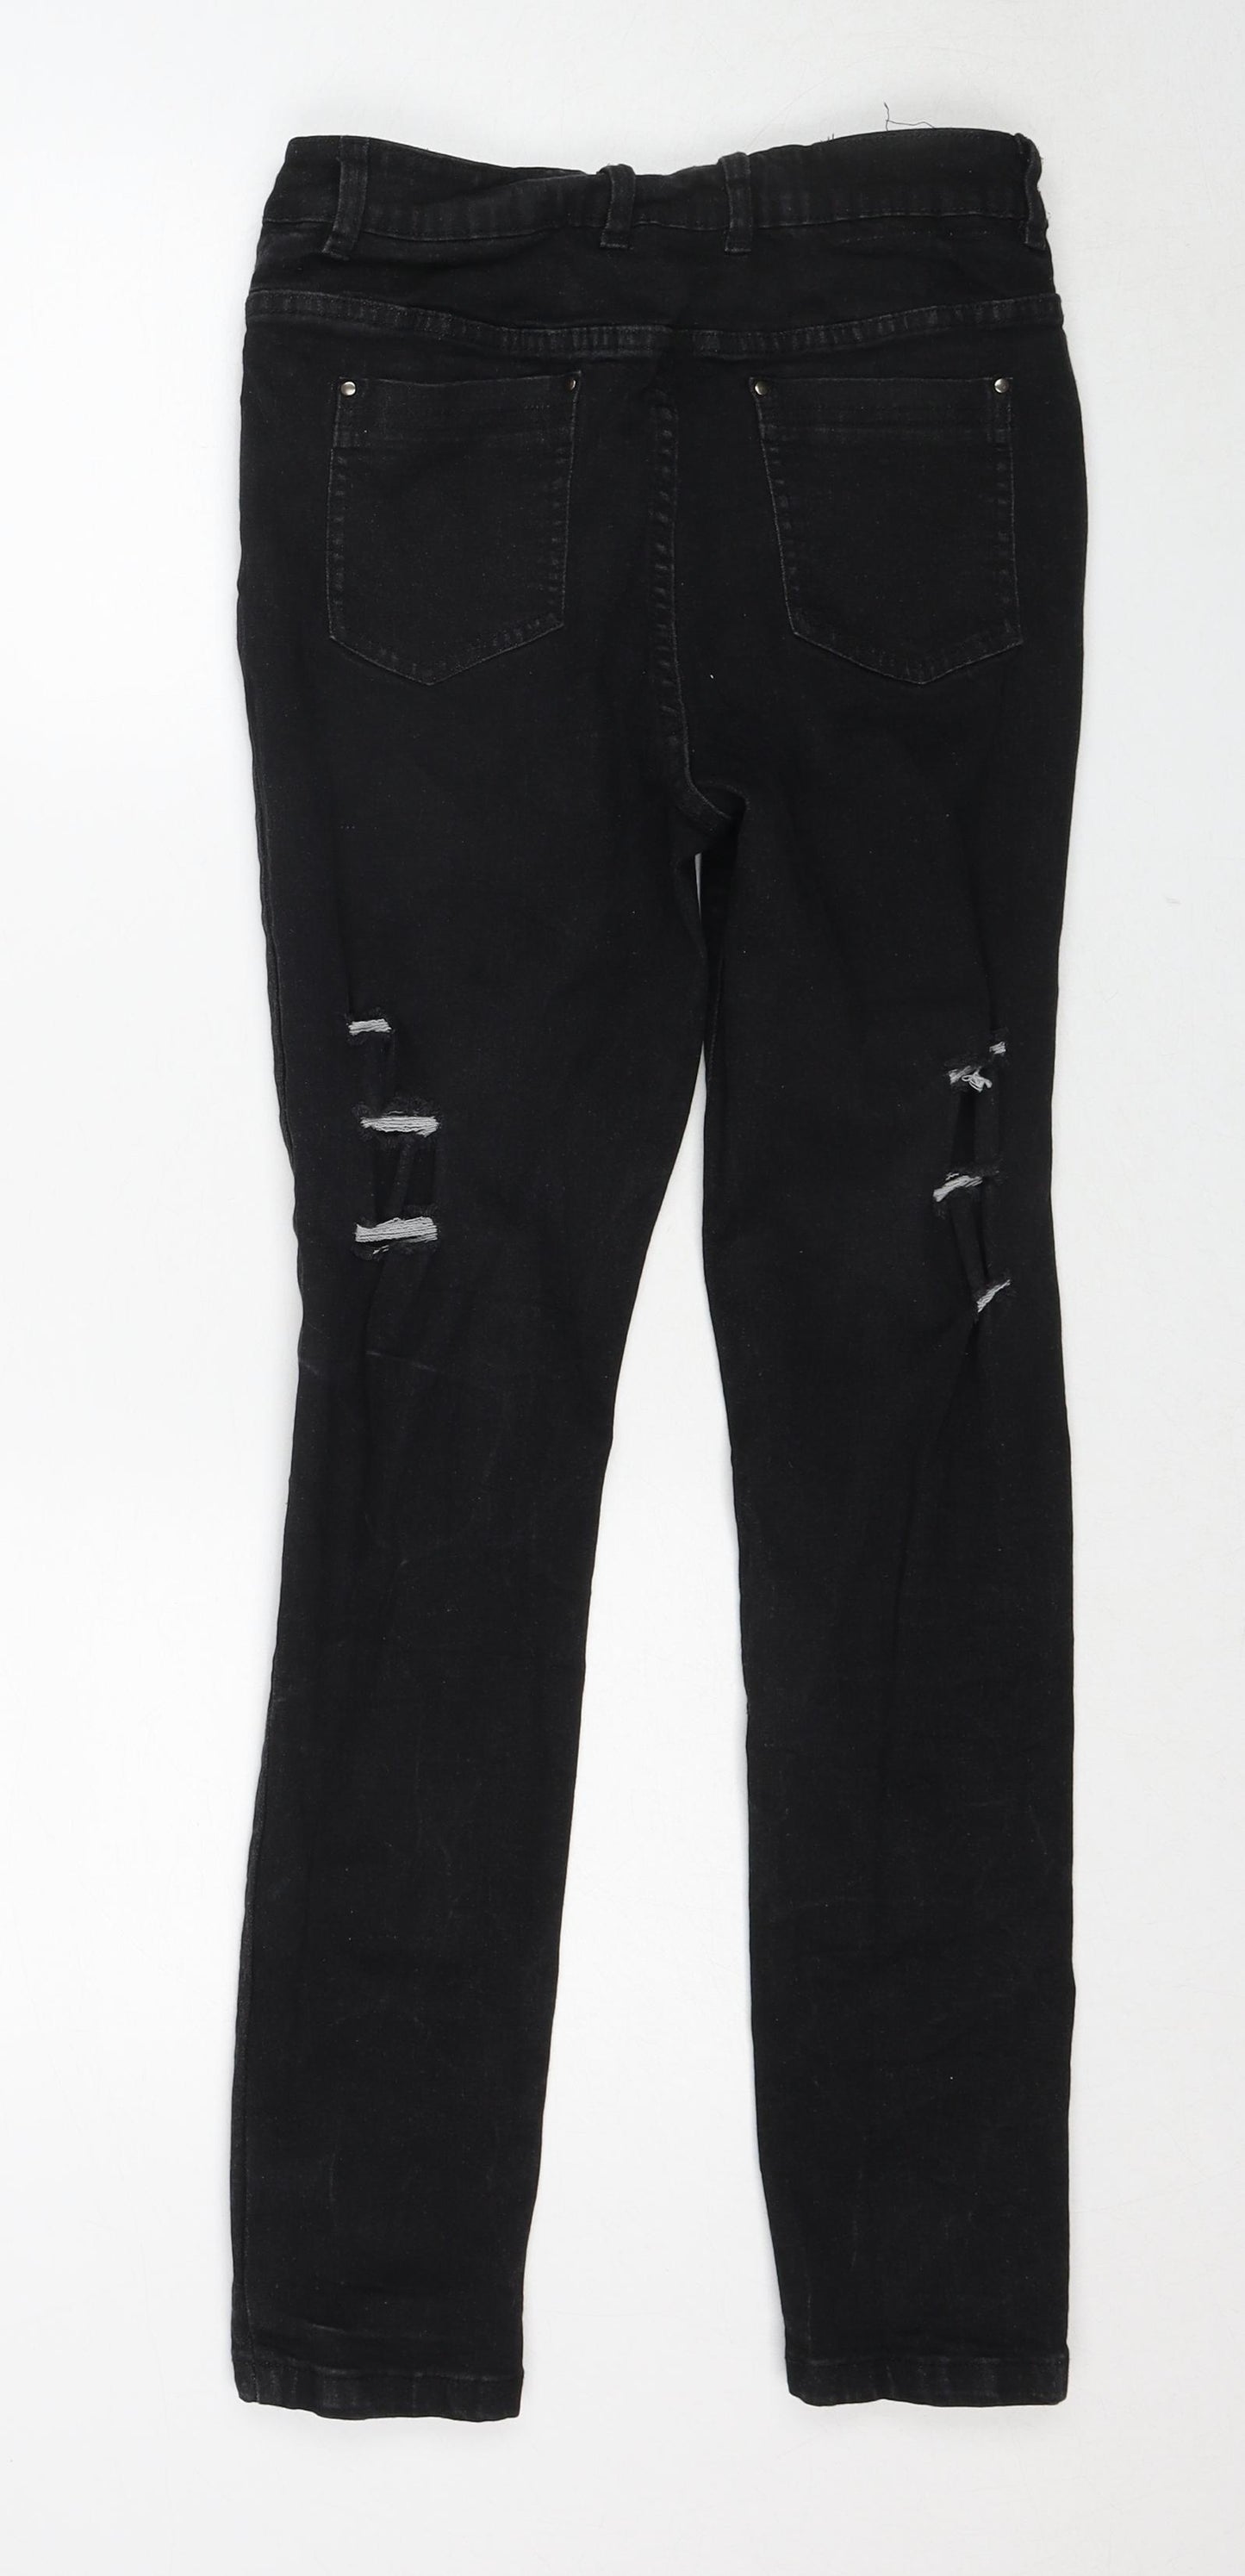 JK Attire Womens Black Cotton Skinny Jeans Size 12 Regular Zip - Fire